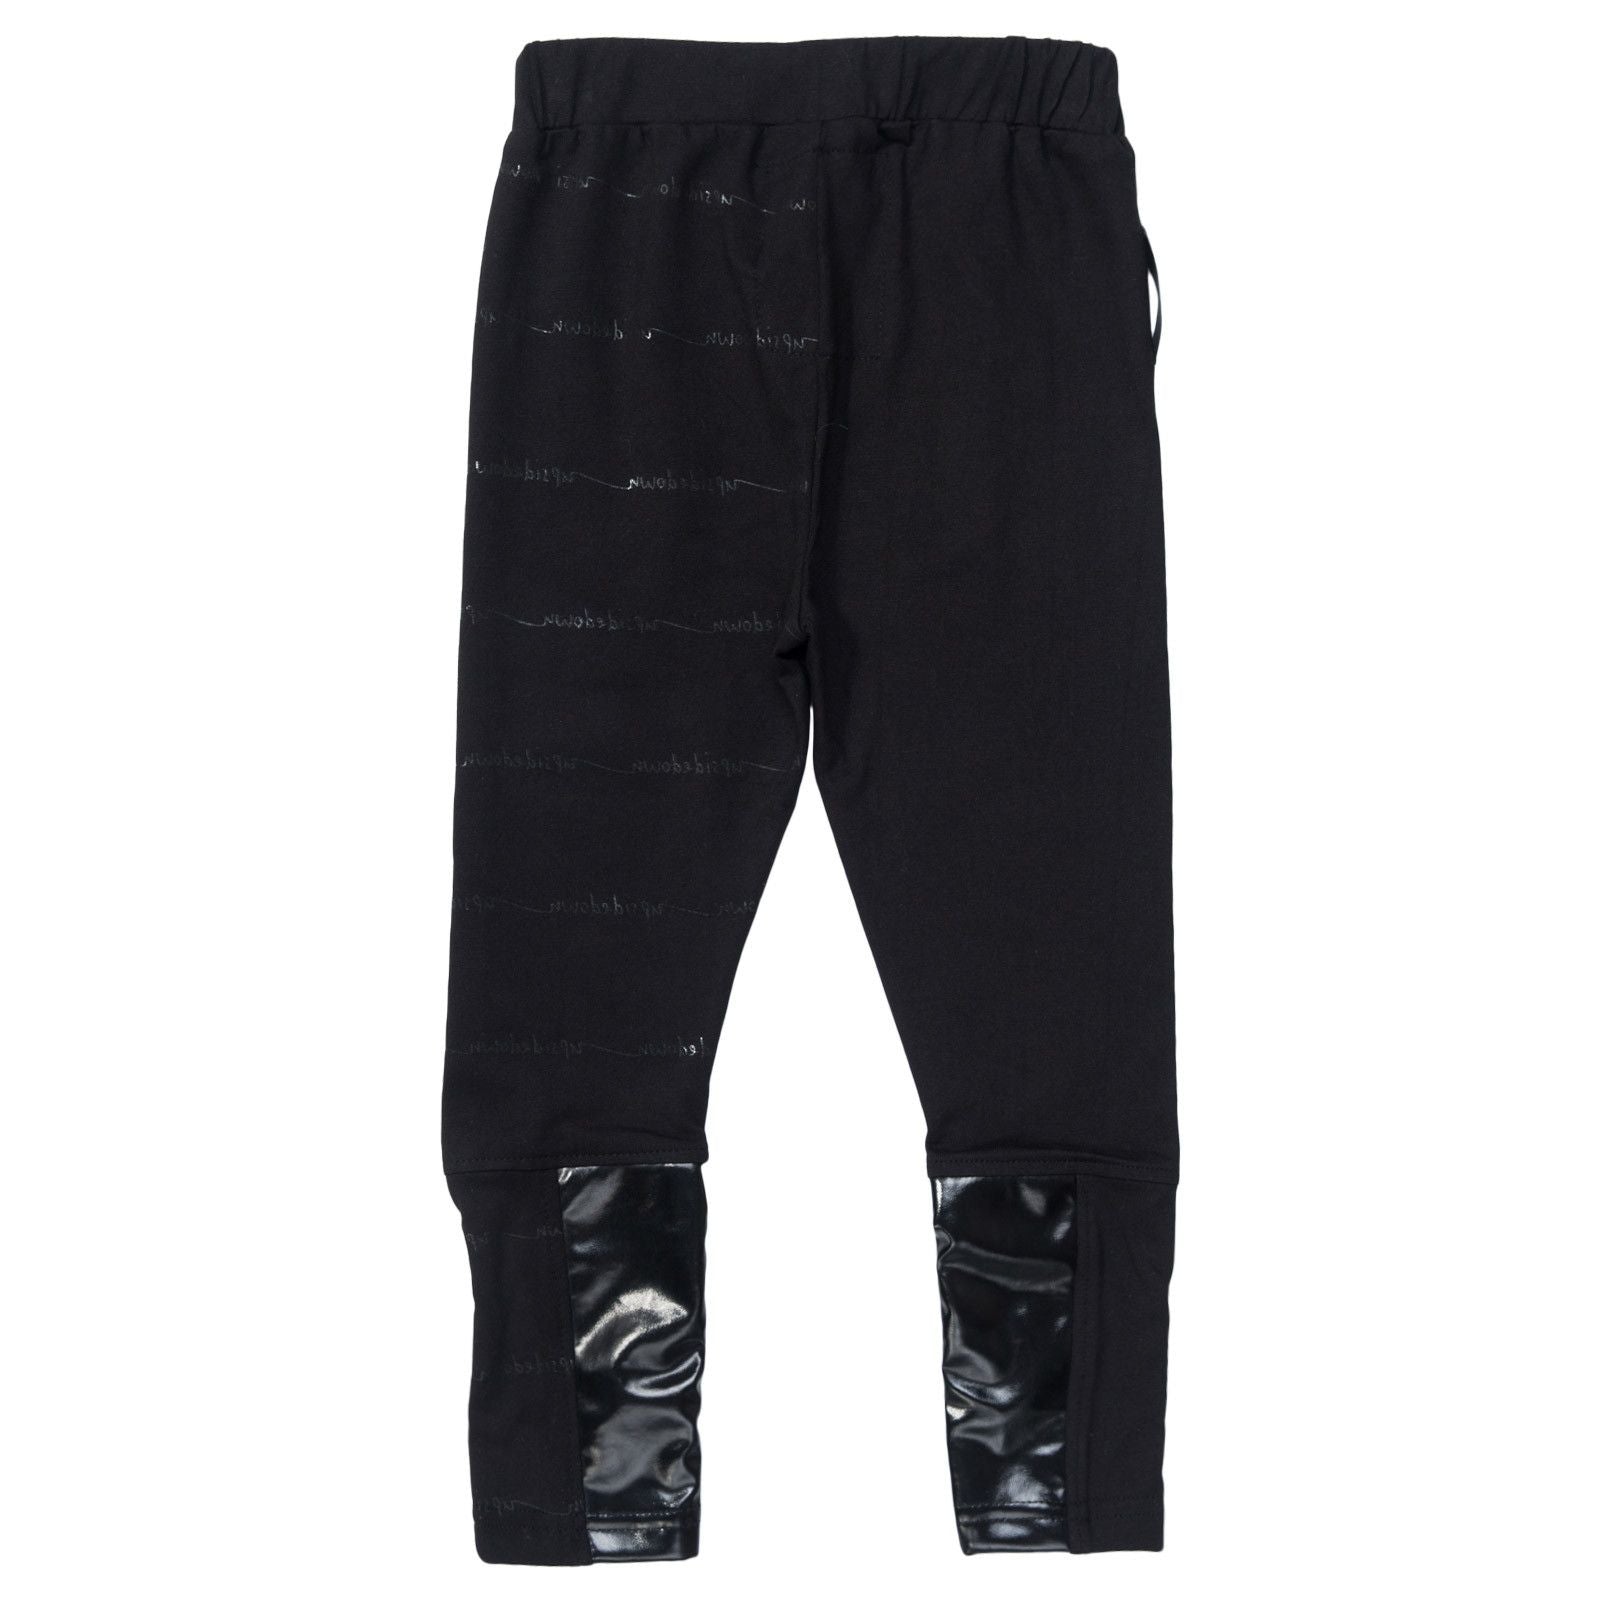 Boys&Girls Black Trouses With Black Printed Trims On Legs - CÉMAROSE | Children's Fashion Store - 2